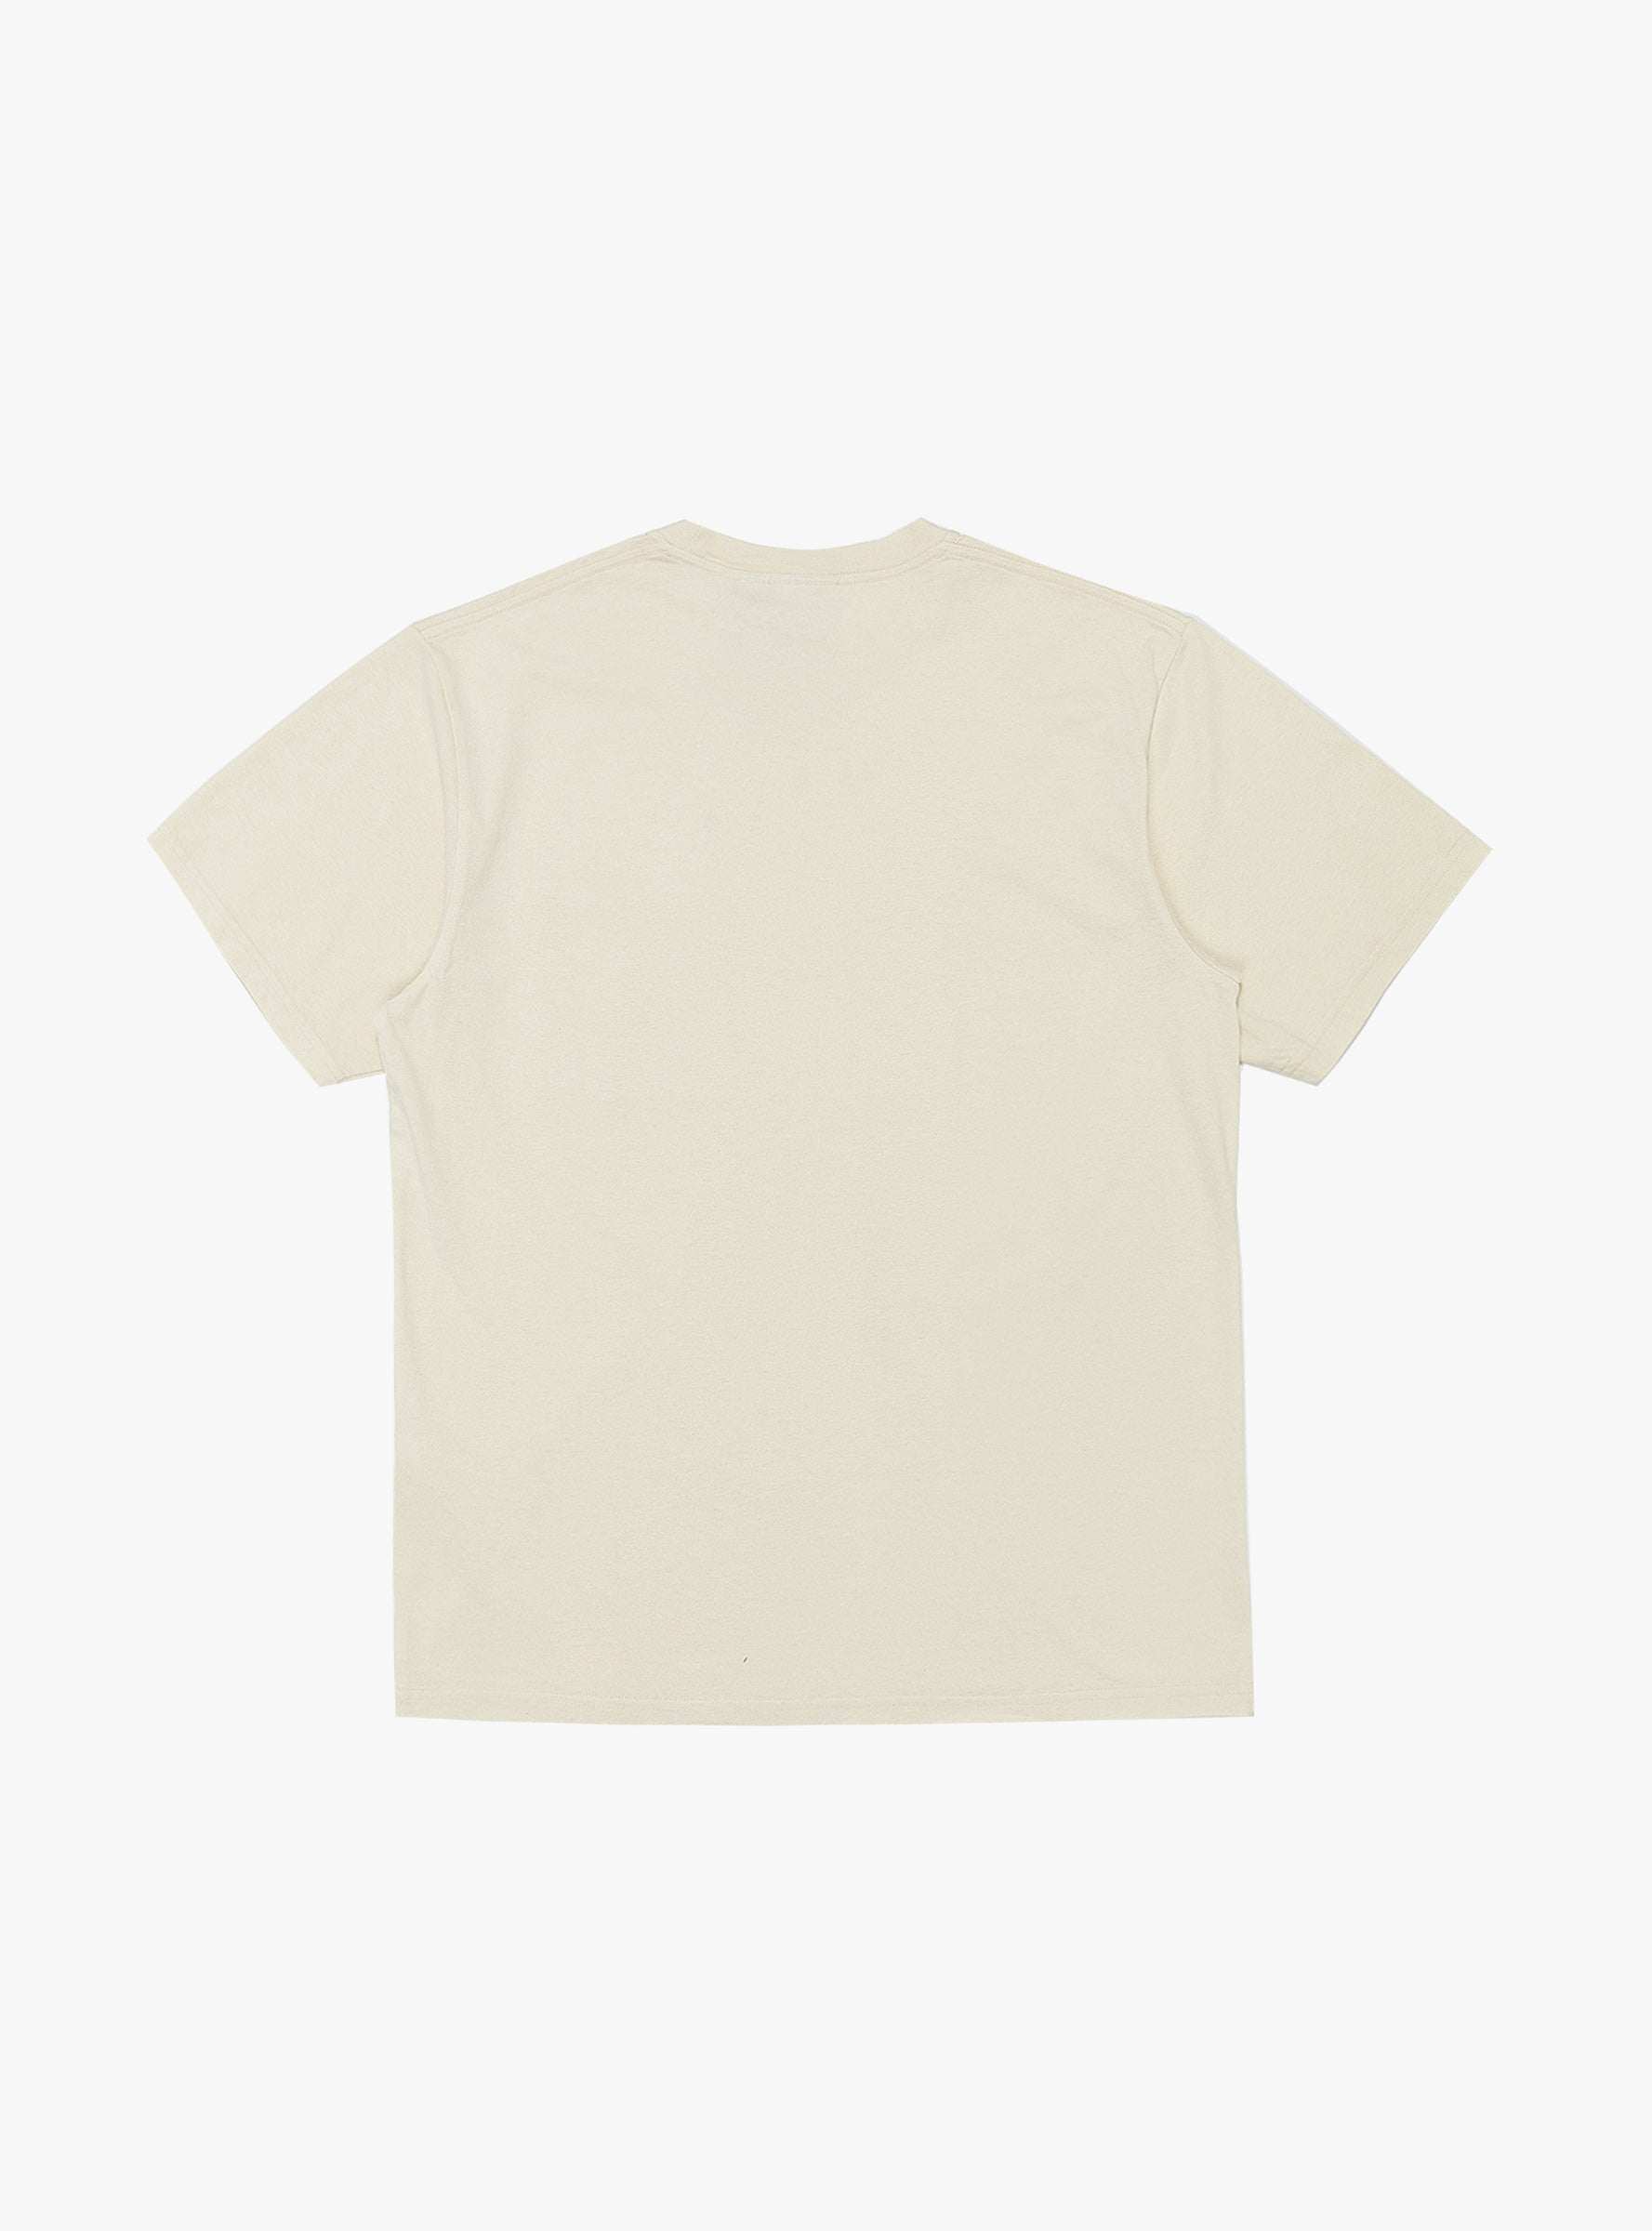 Gramicci Gramicci One Point T-shirt Sand Pigment - Size: Small